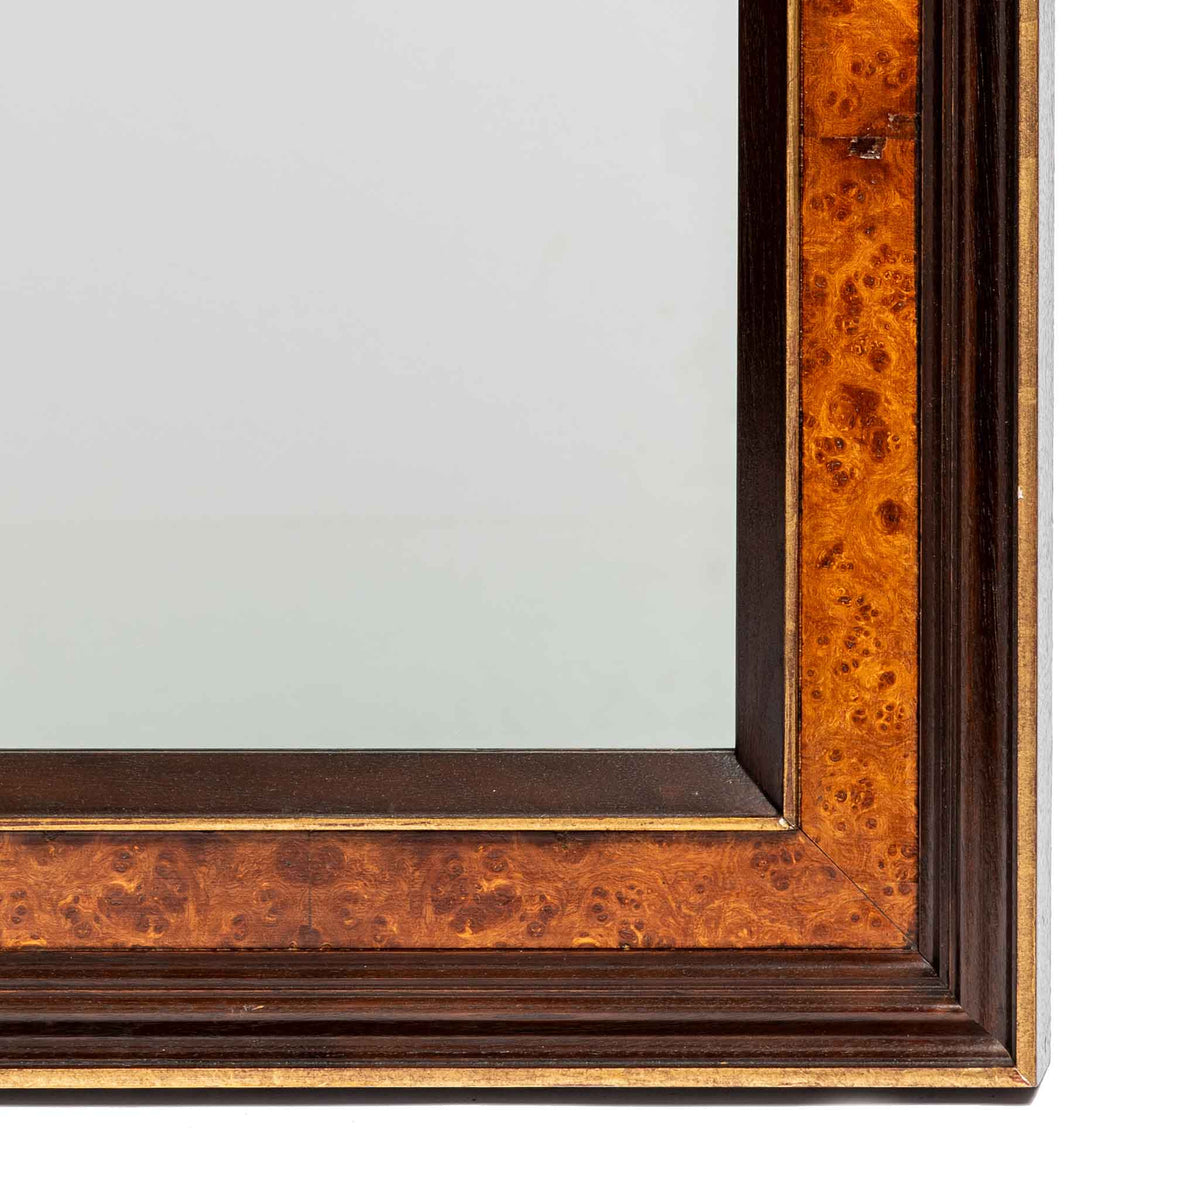 Mirror wood frame S1 F28